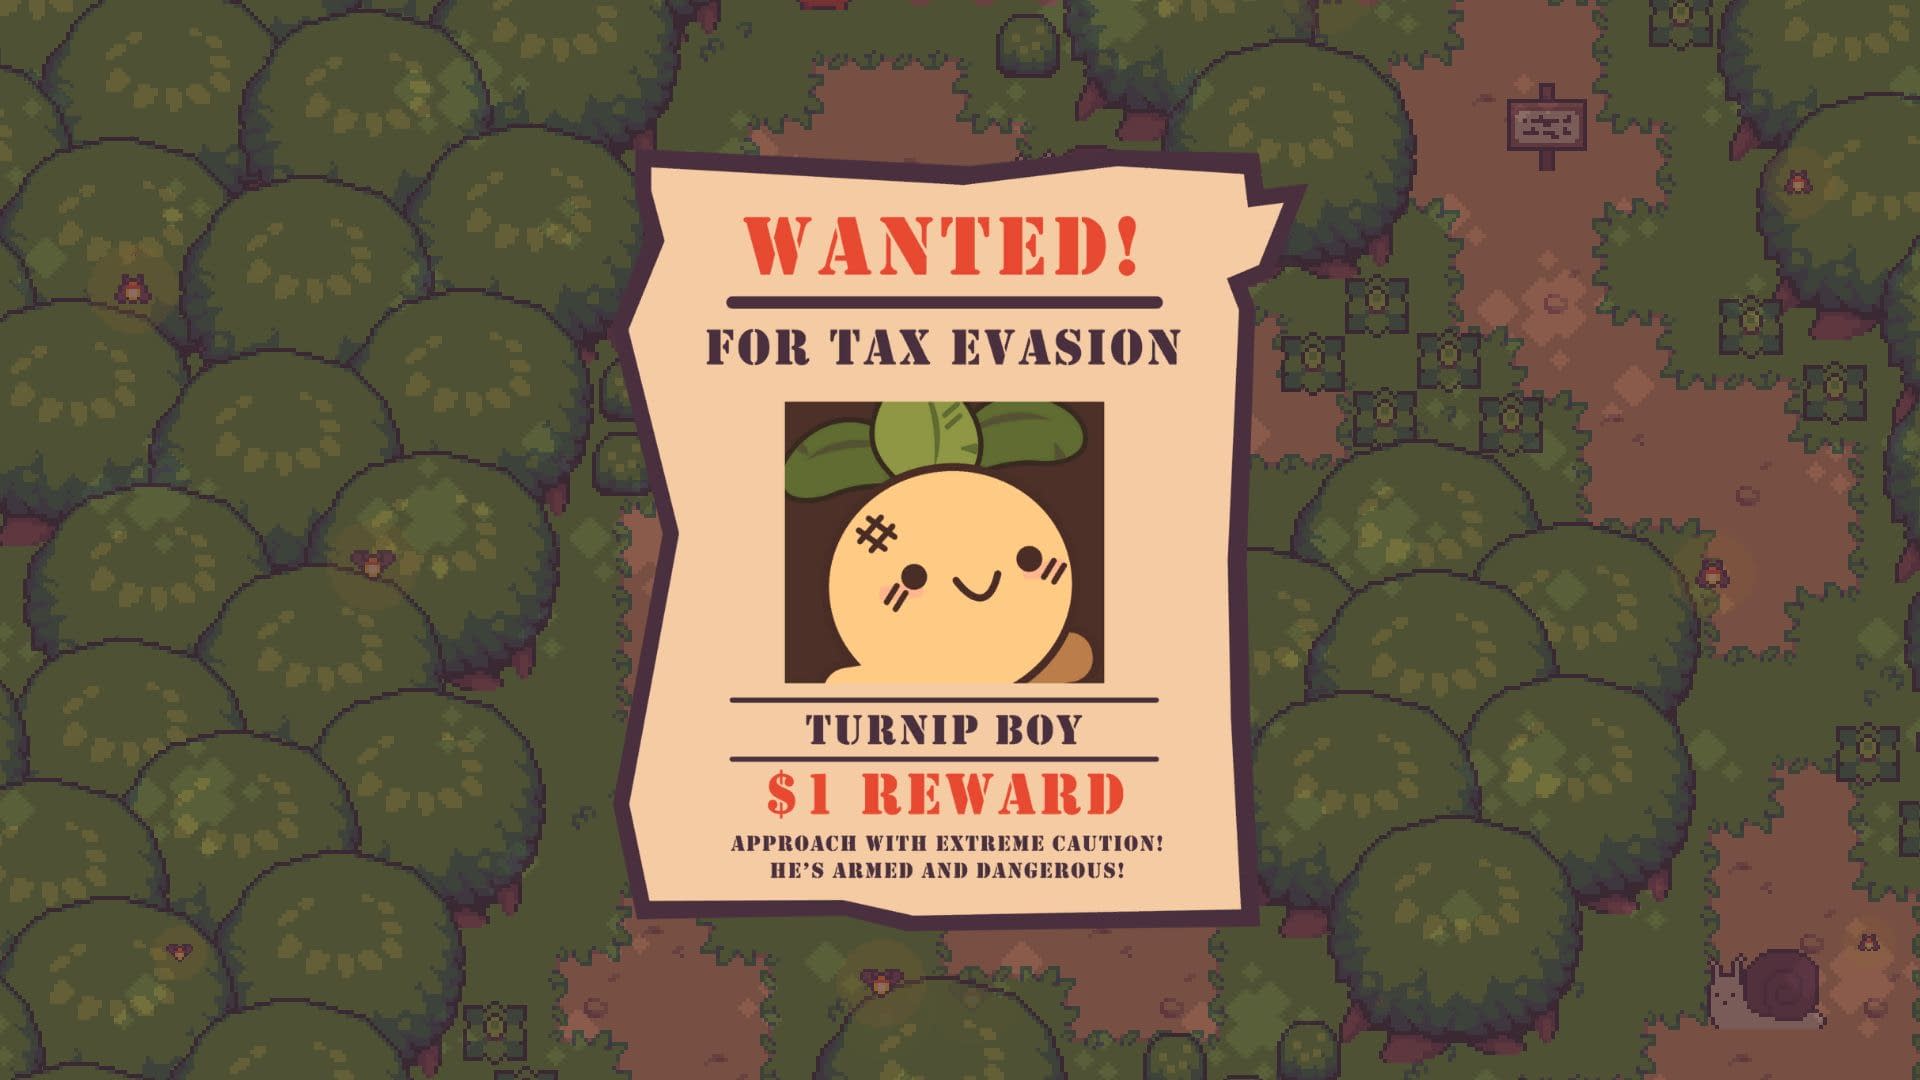 turnip boy commits tax evasion metacritic